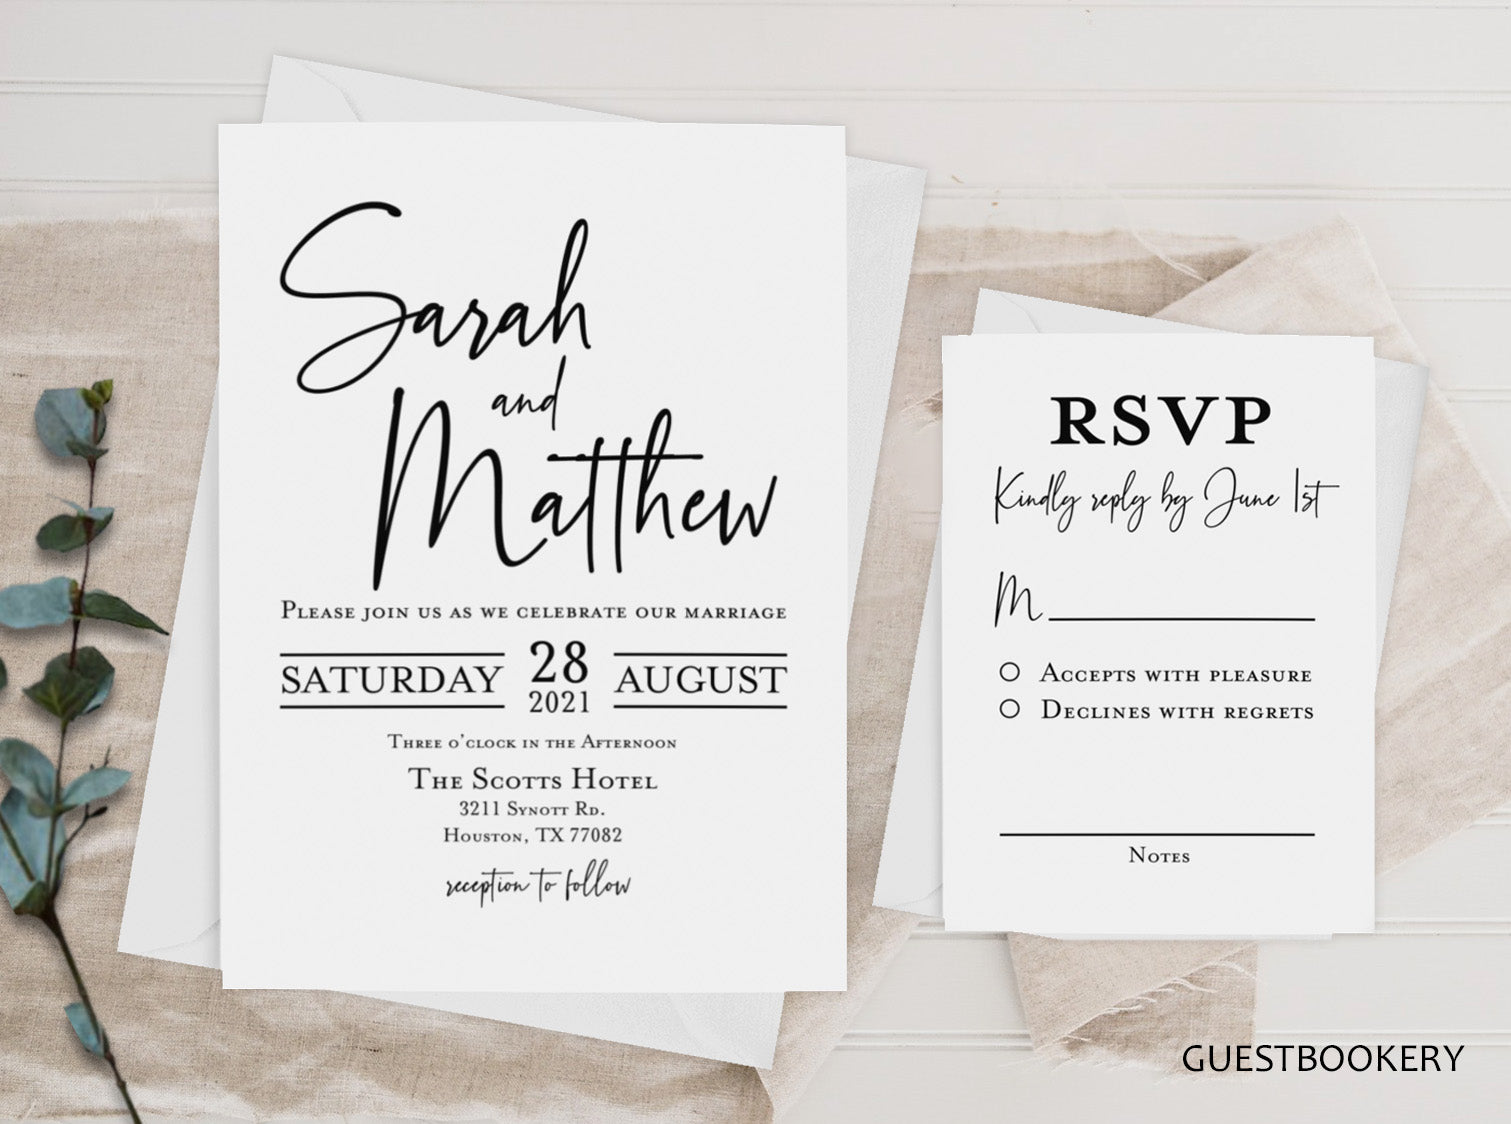 Guestbookery Modern Wedding Invitations set